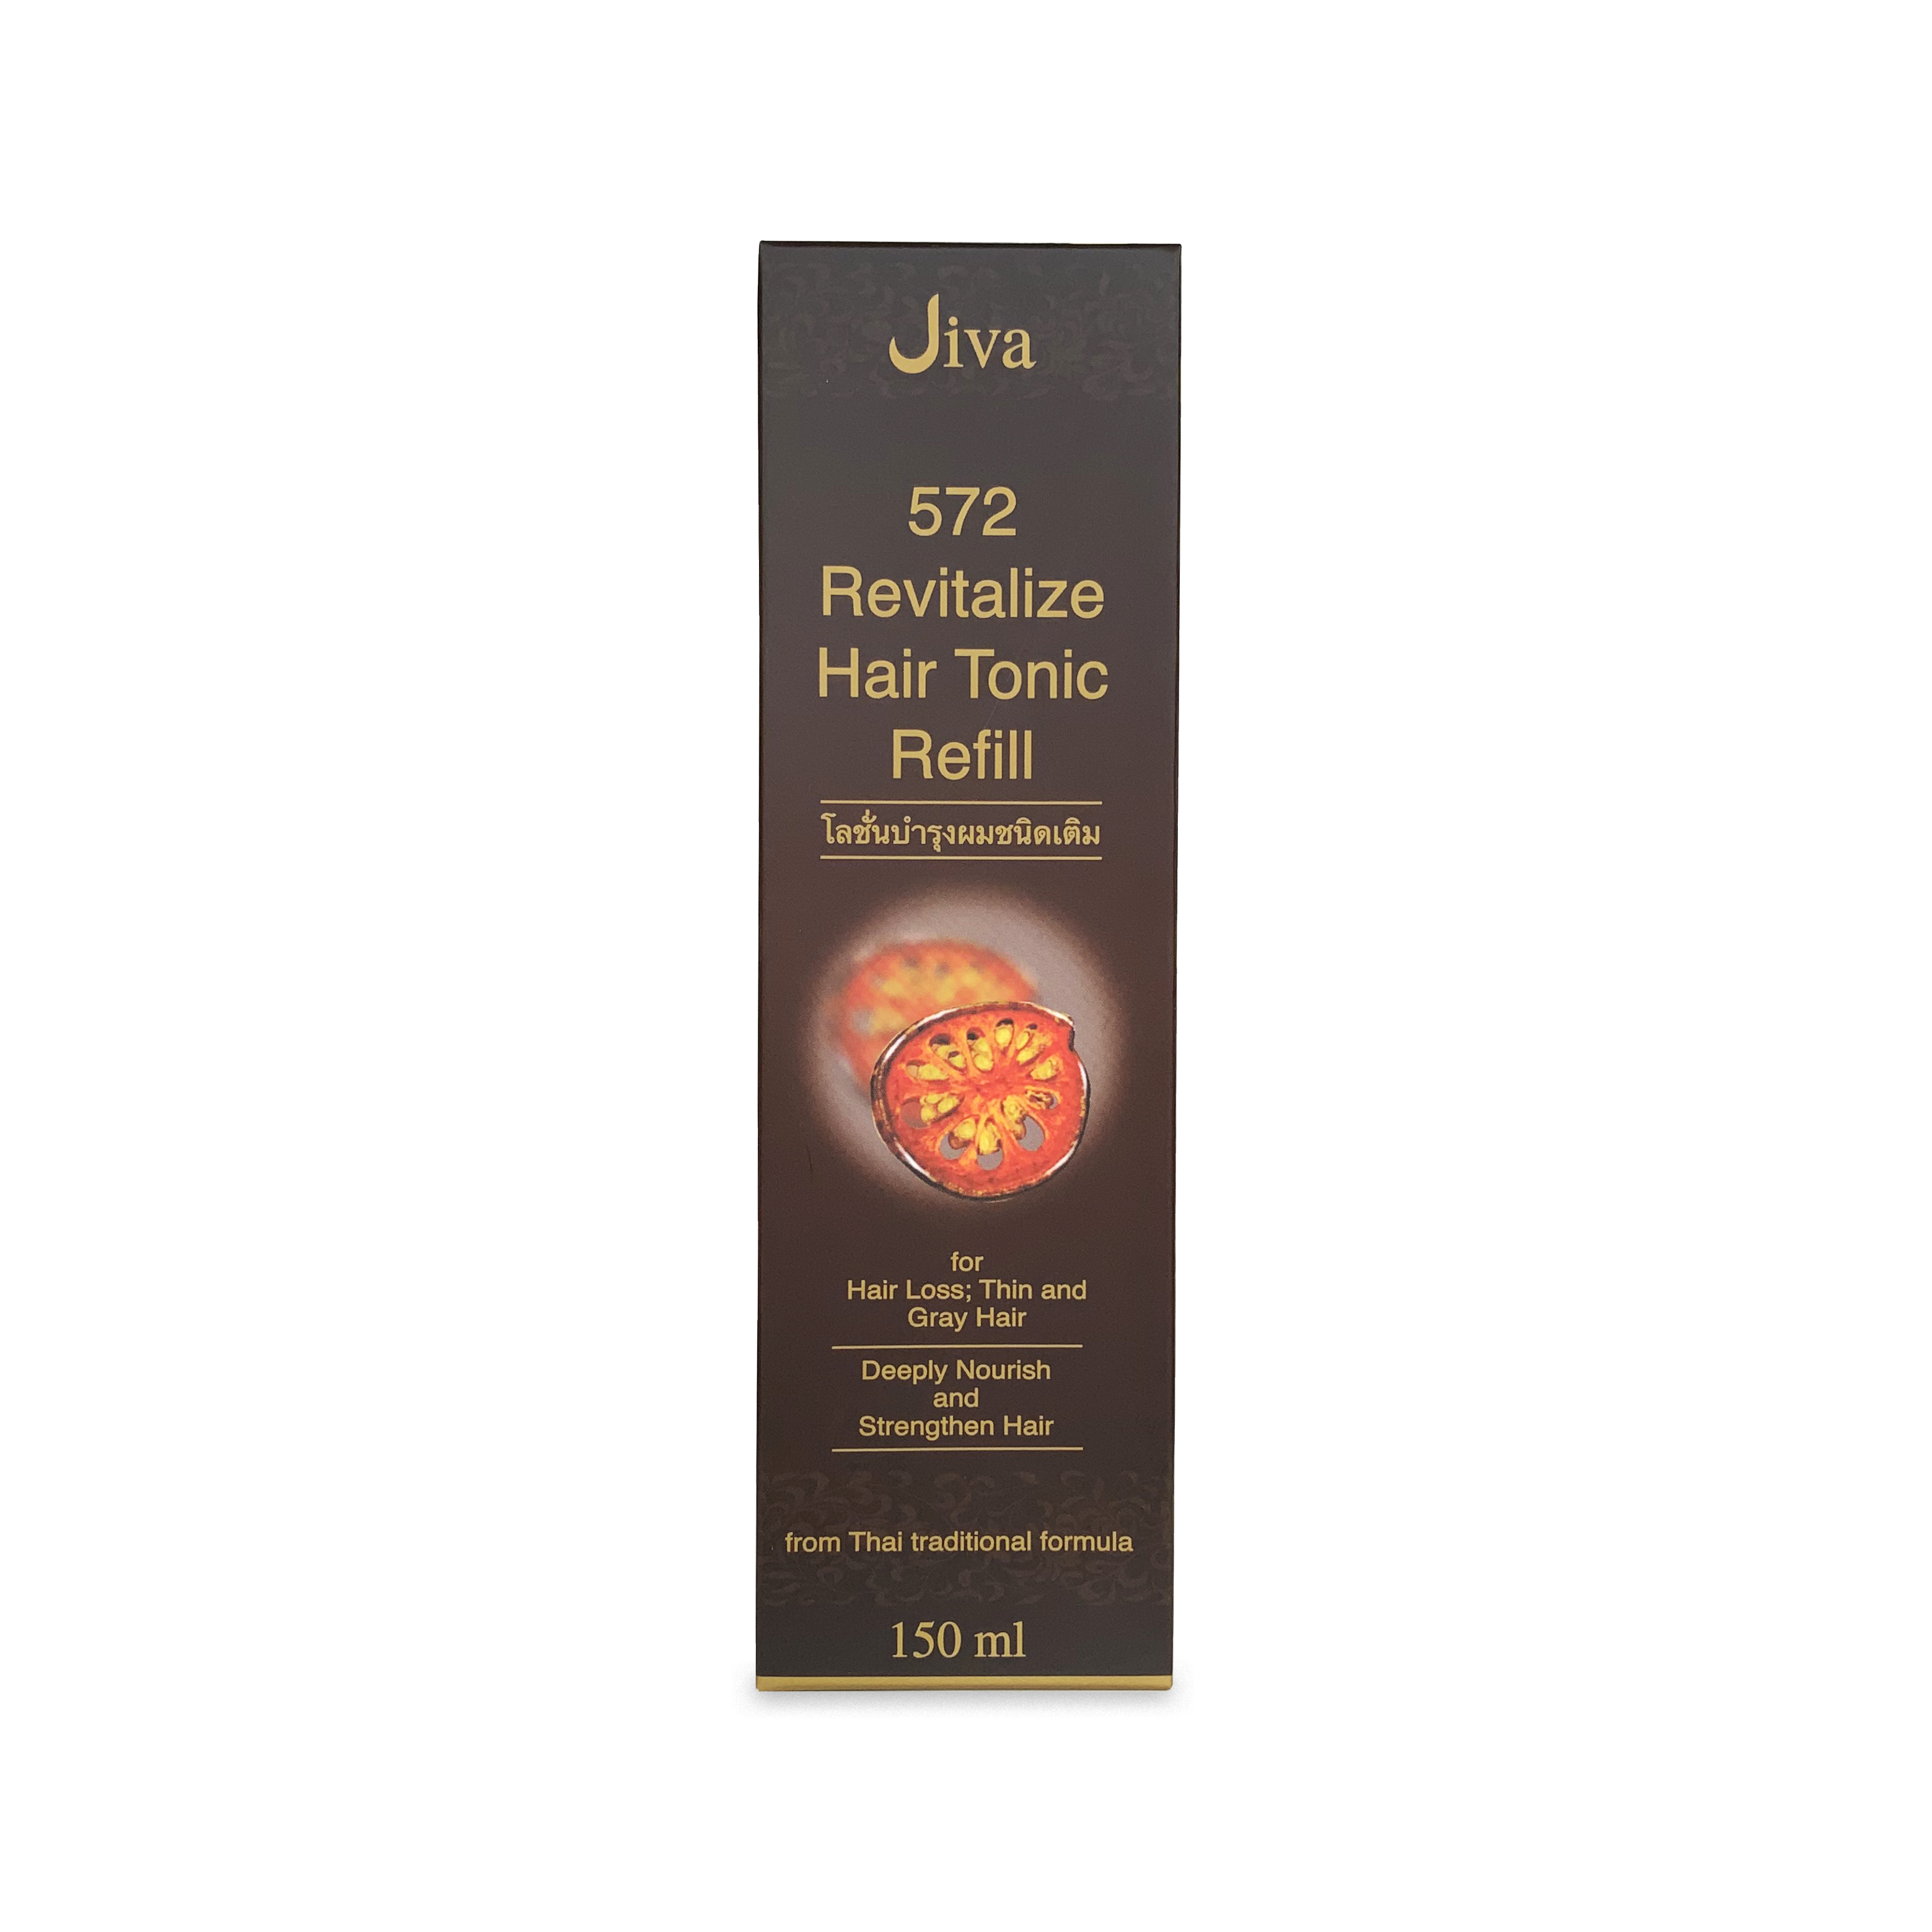 JIVA Revitalize Hair Tonic - จีวา รีไวต้าไลซ์ แฮร์ โทนิค (ชนิดเติม)